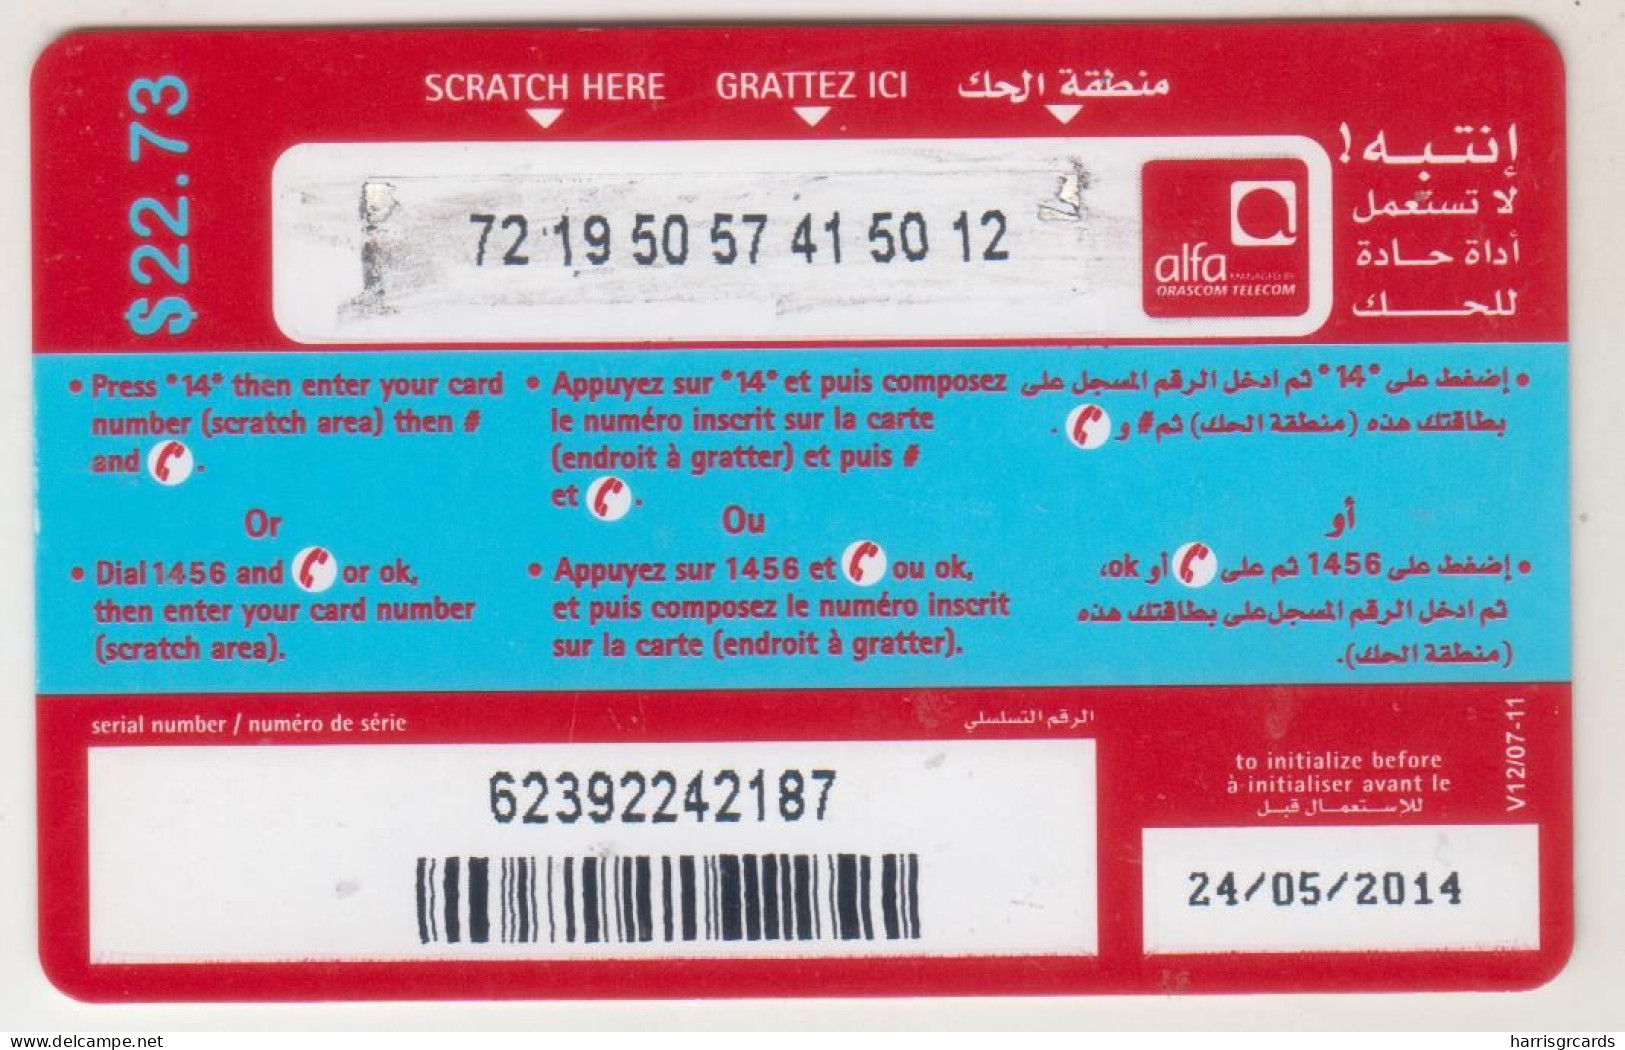 LEBANON - Jbeil Sea View , Alfa Recharge Card 22.73$, Exp.date 24/05/14, Used - Liban